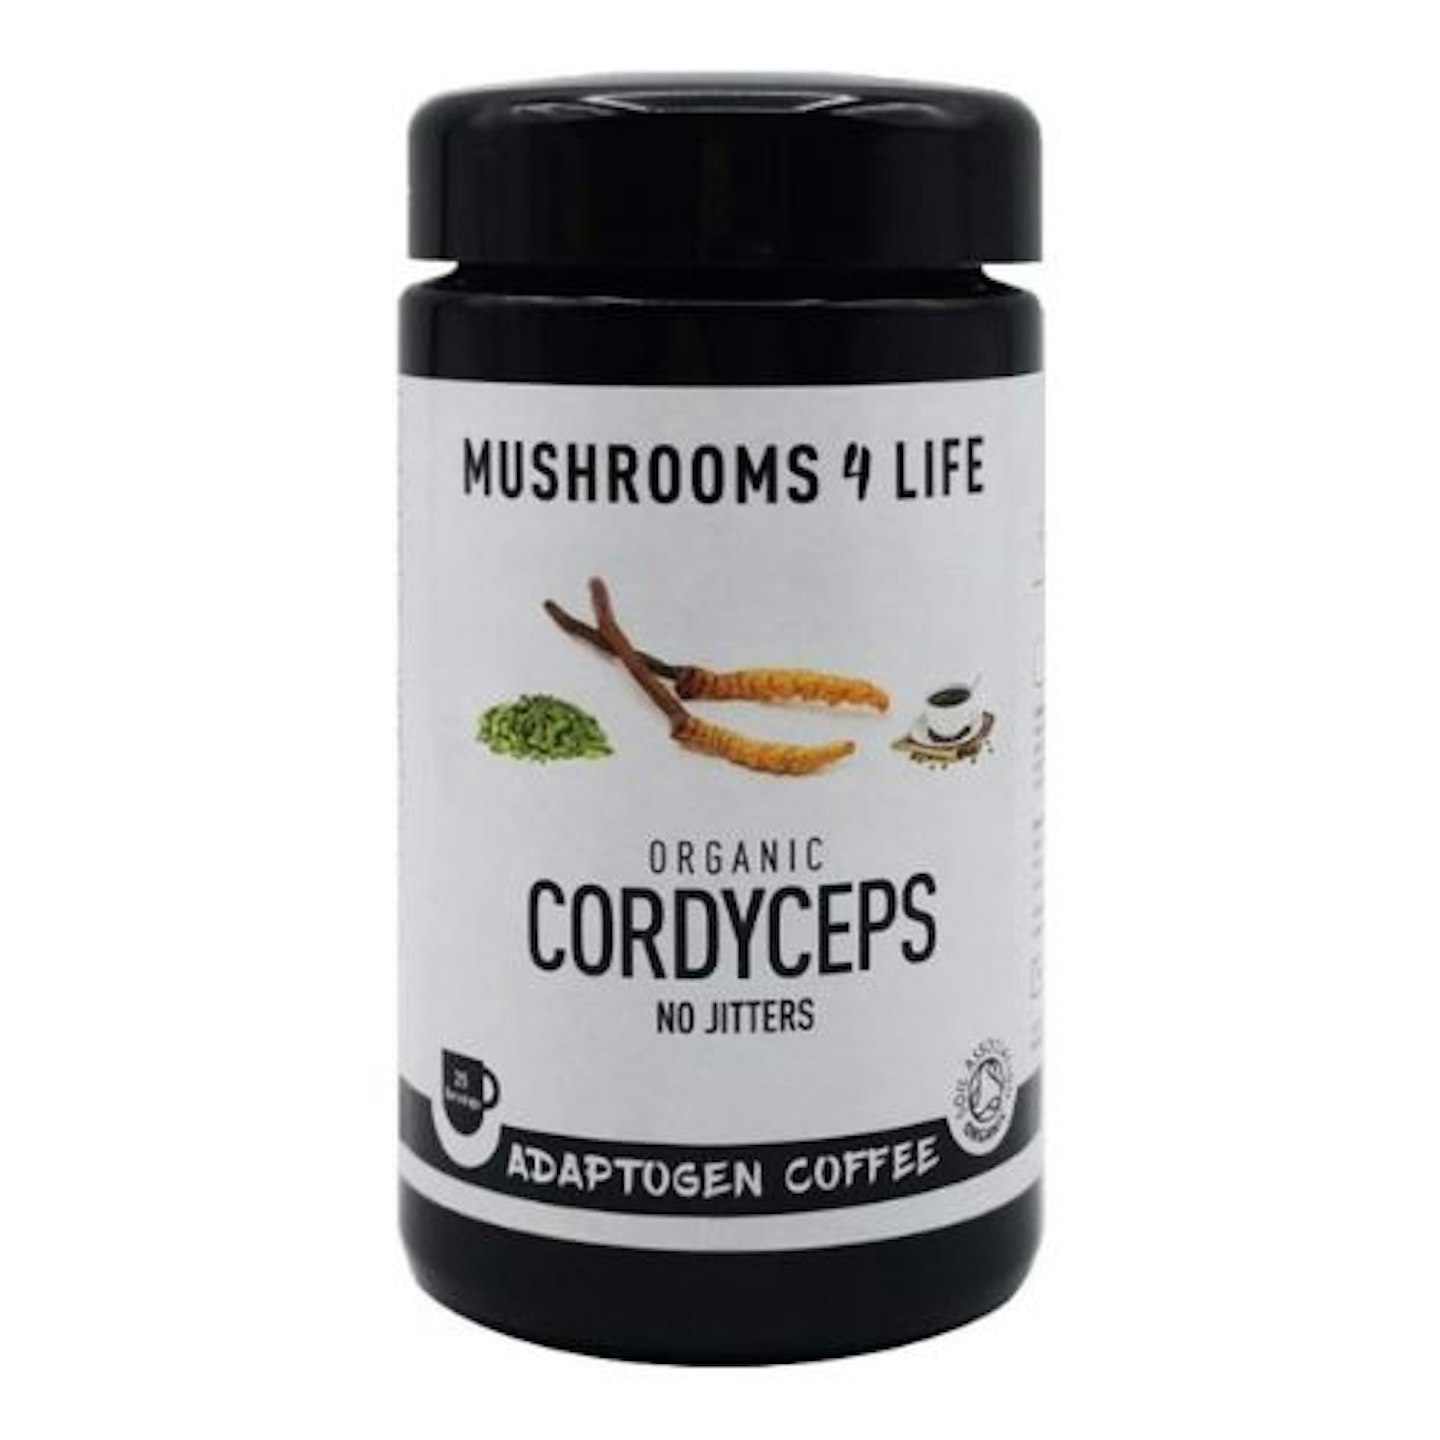 Mushrooms 4 Life Organic Cordyceps Coffee